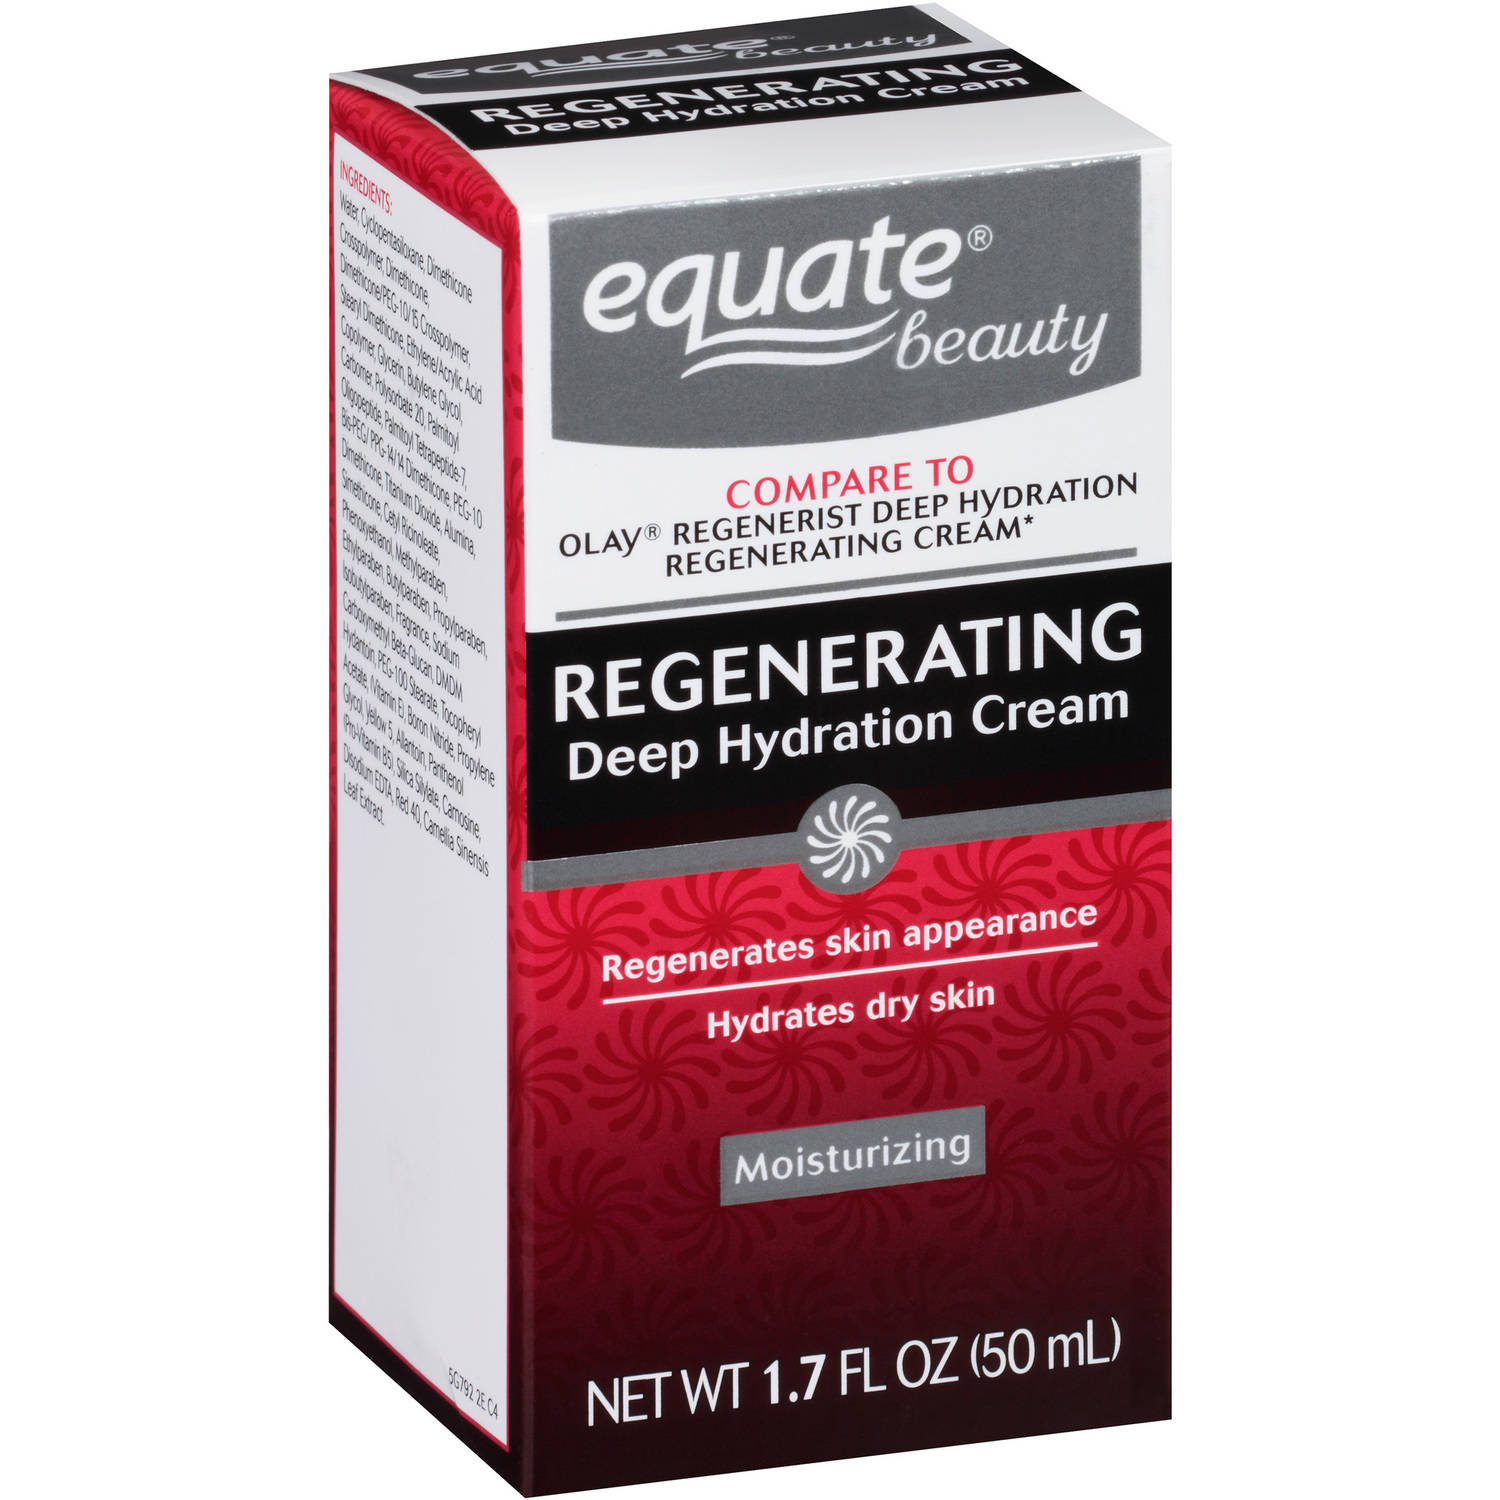 Equate Regenerating Deep Hydration Cream, 1.7 Oz - image 1 of 5